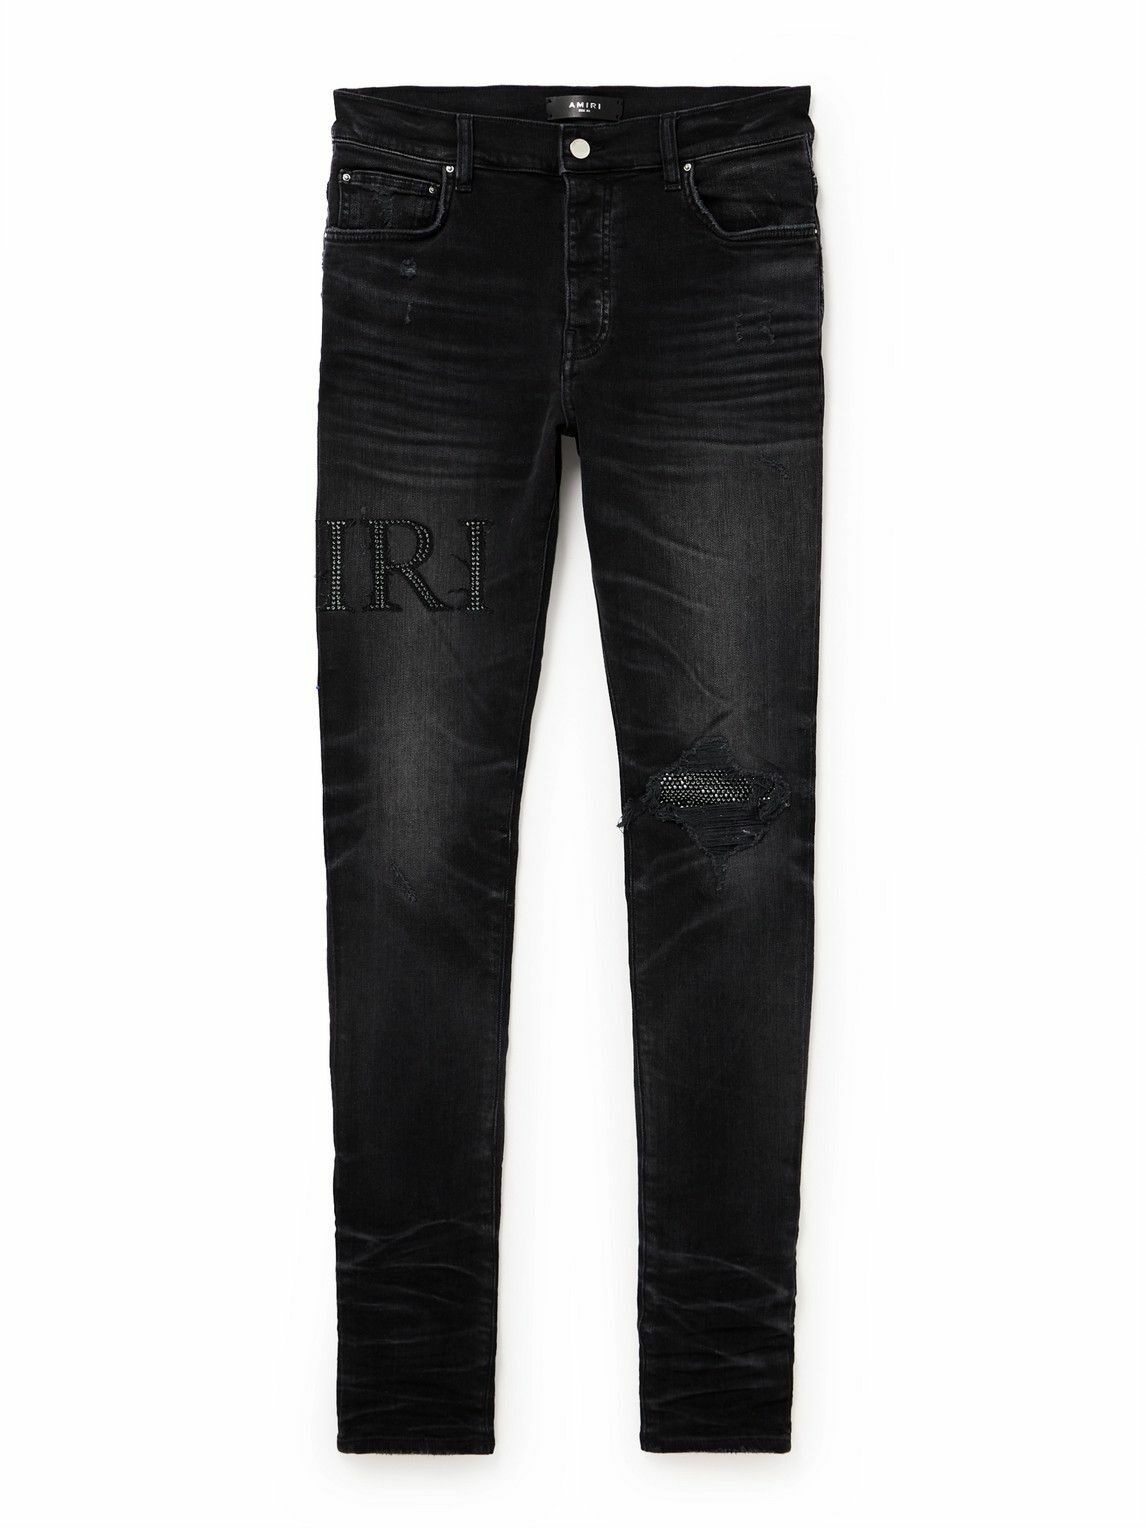 AMIRI - Skinny-Fit Crystal-Embellished Distressed Jeans - Black Amiri